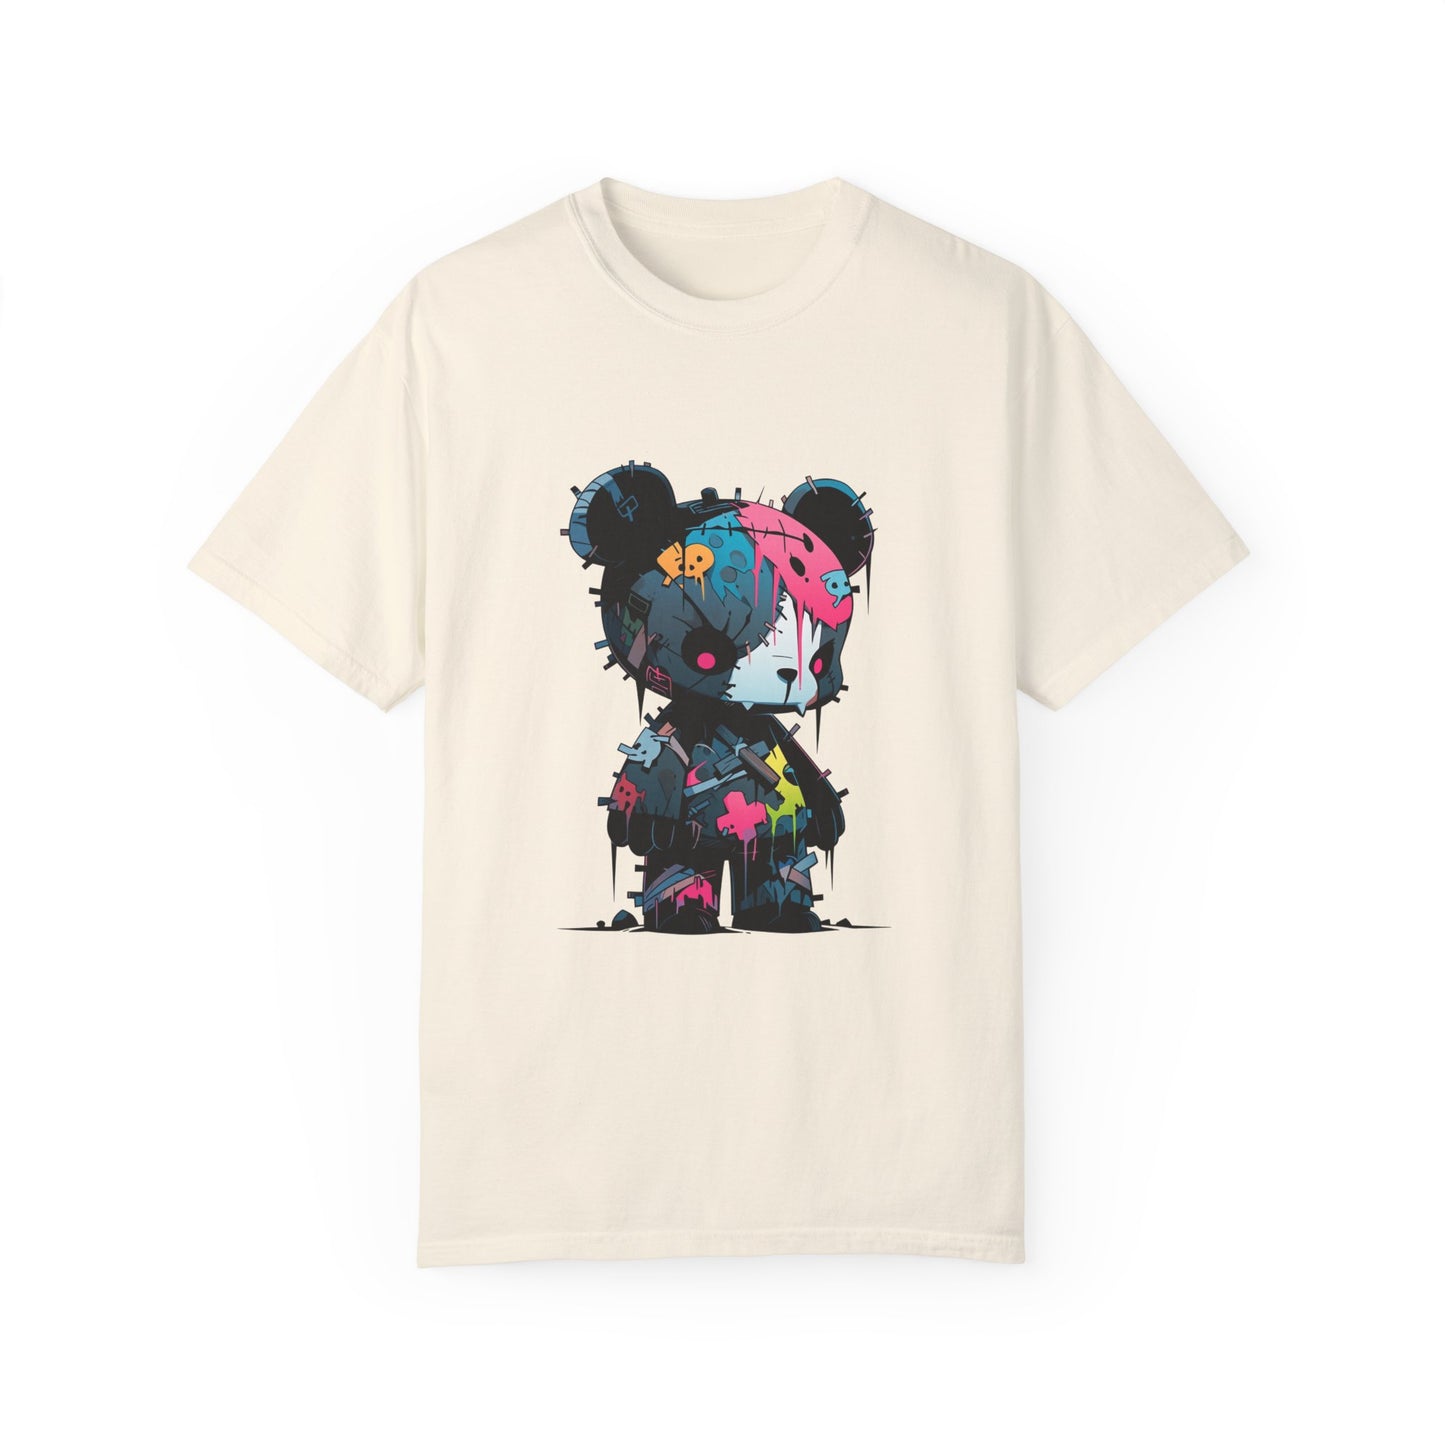 Hip Hop Teddy Bear Graphic Unisex Garment-dyed T-shirt Cotton Funny Humorous Graphic Soft Premium Unisex Men Women Ivory T-shirt Birthday Gift-10